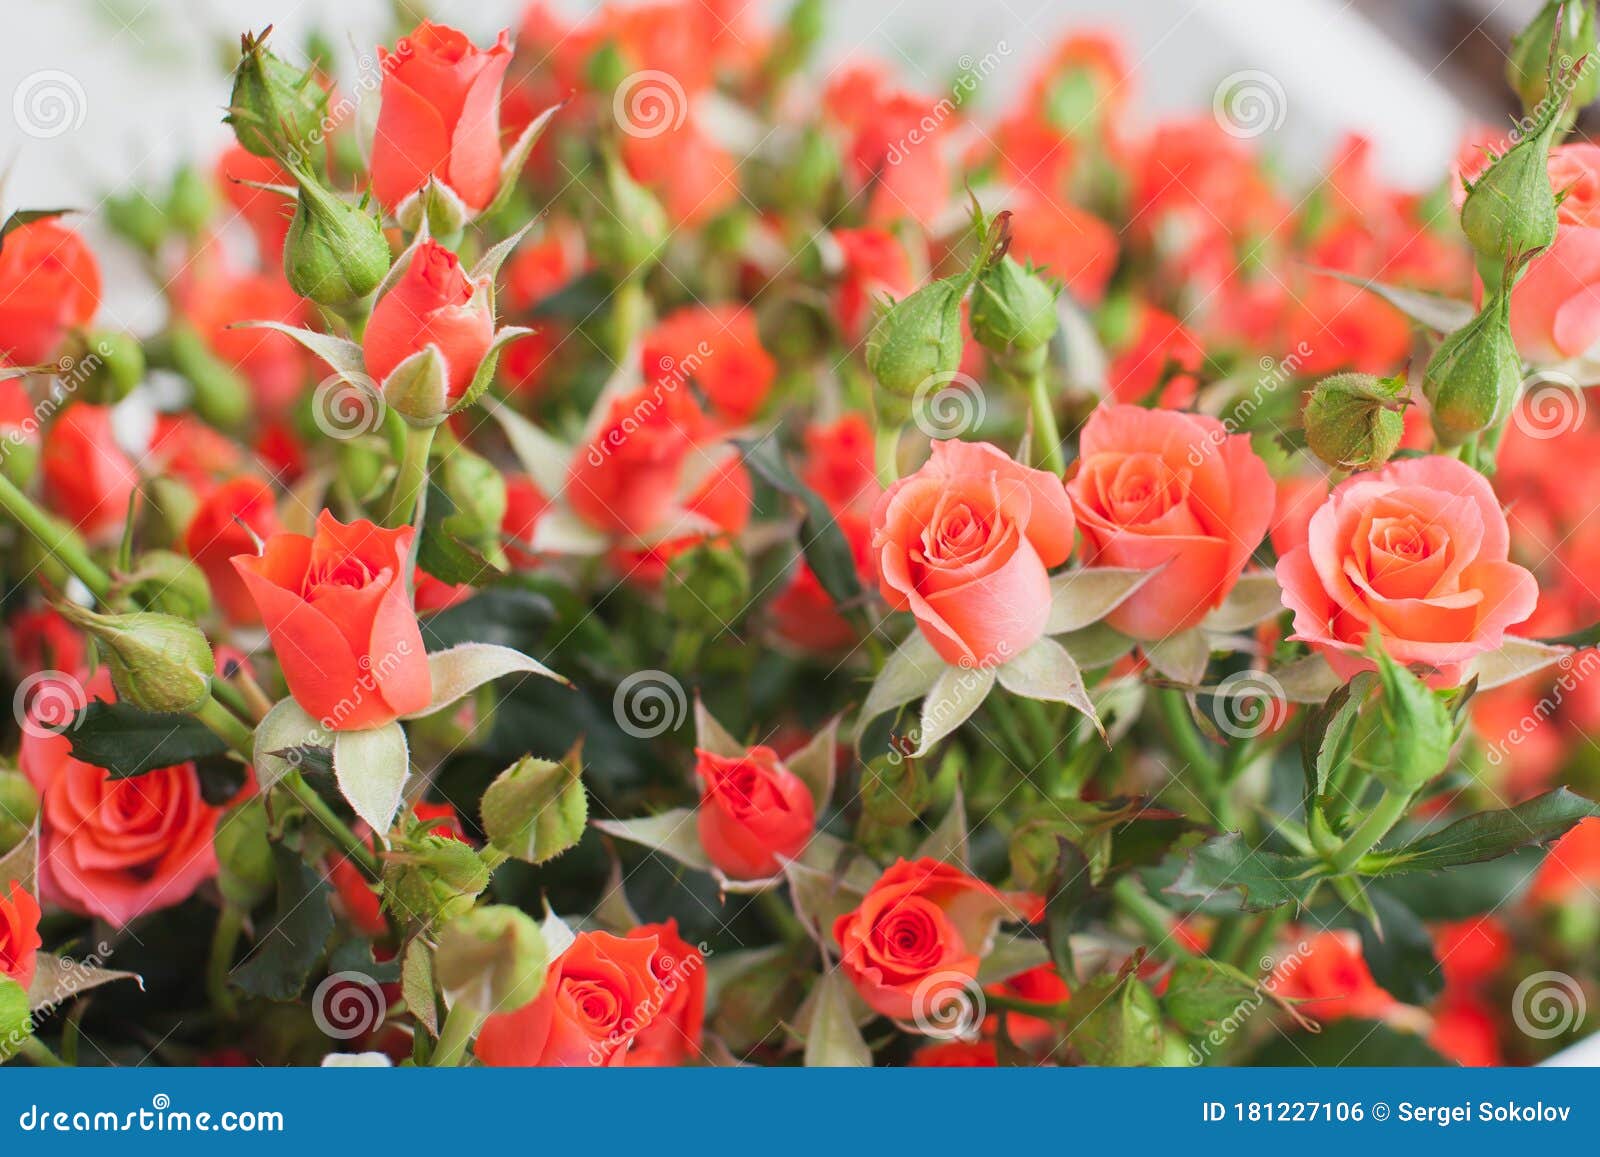 roses ruiortro alegria bush background